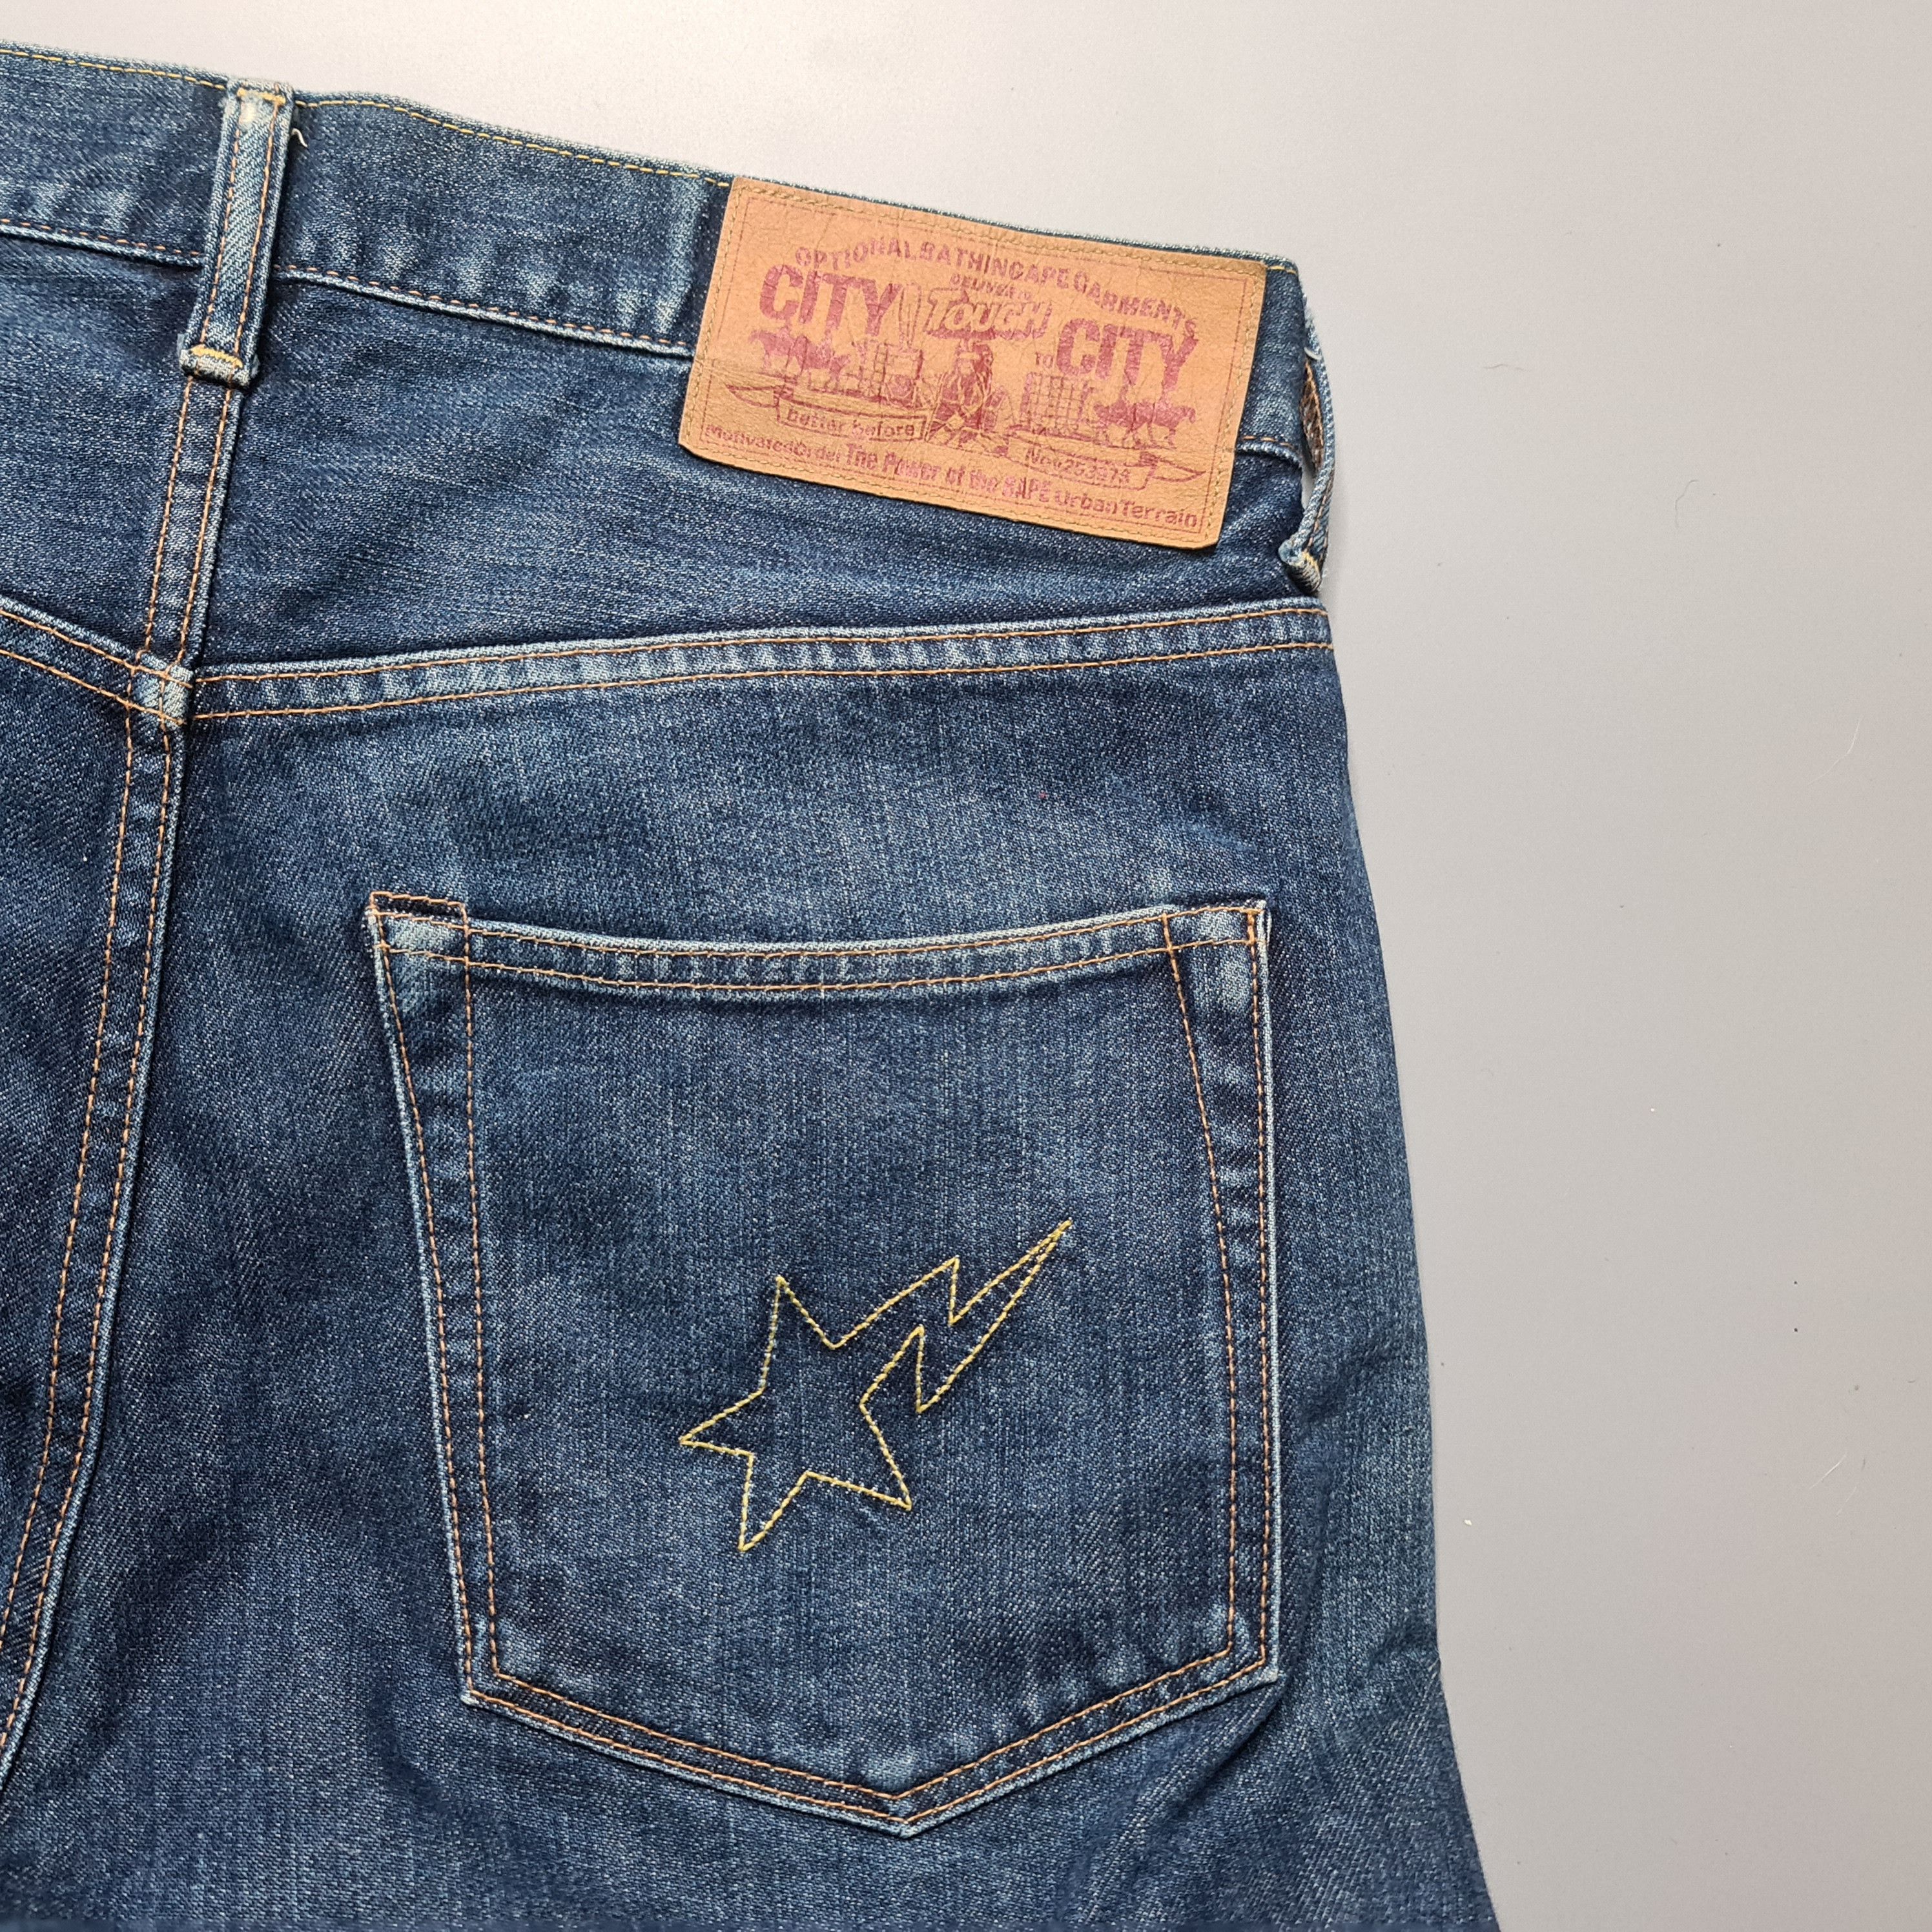 Bape - OG Bape "Sta" Embroidered Jeans - 7